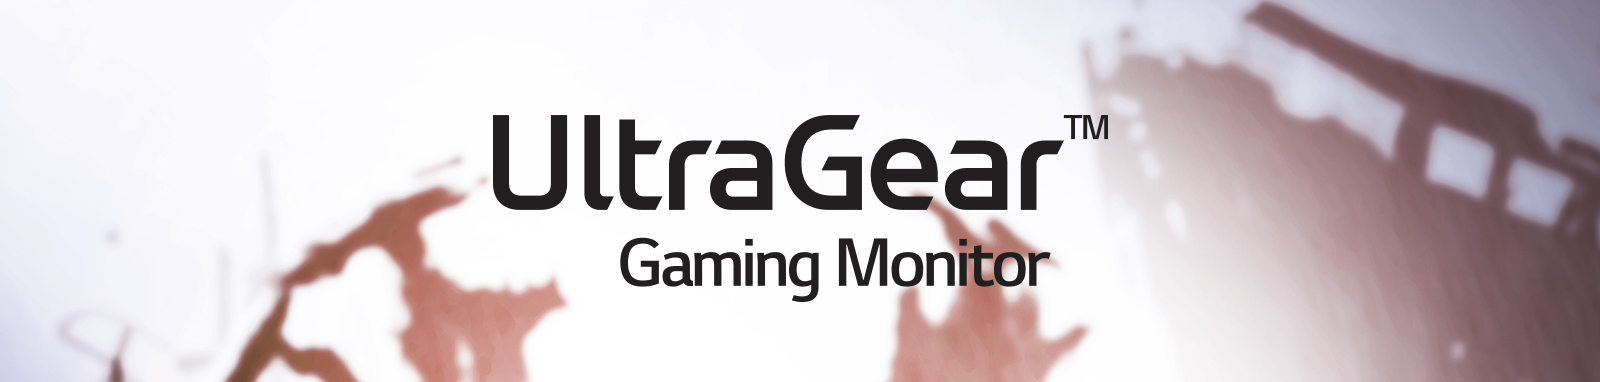 ultraGear gaming monitor logo